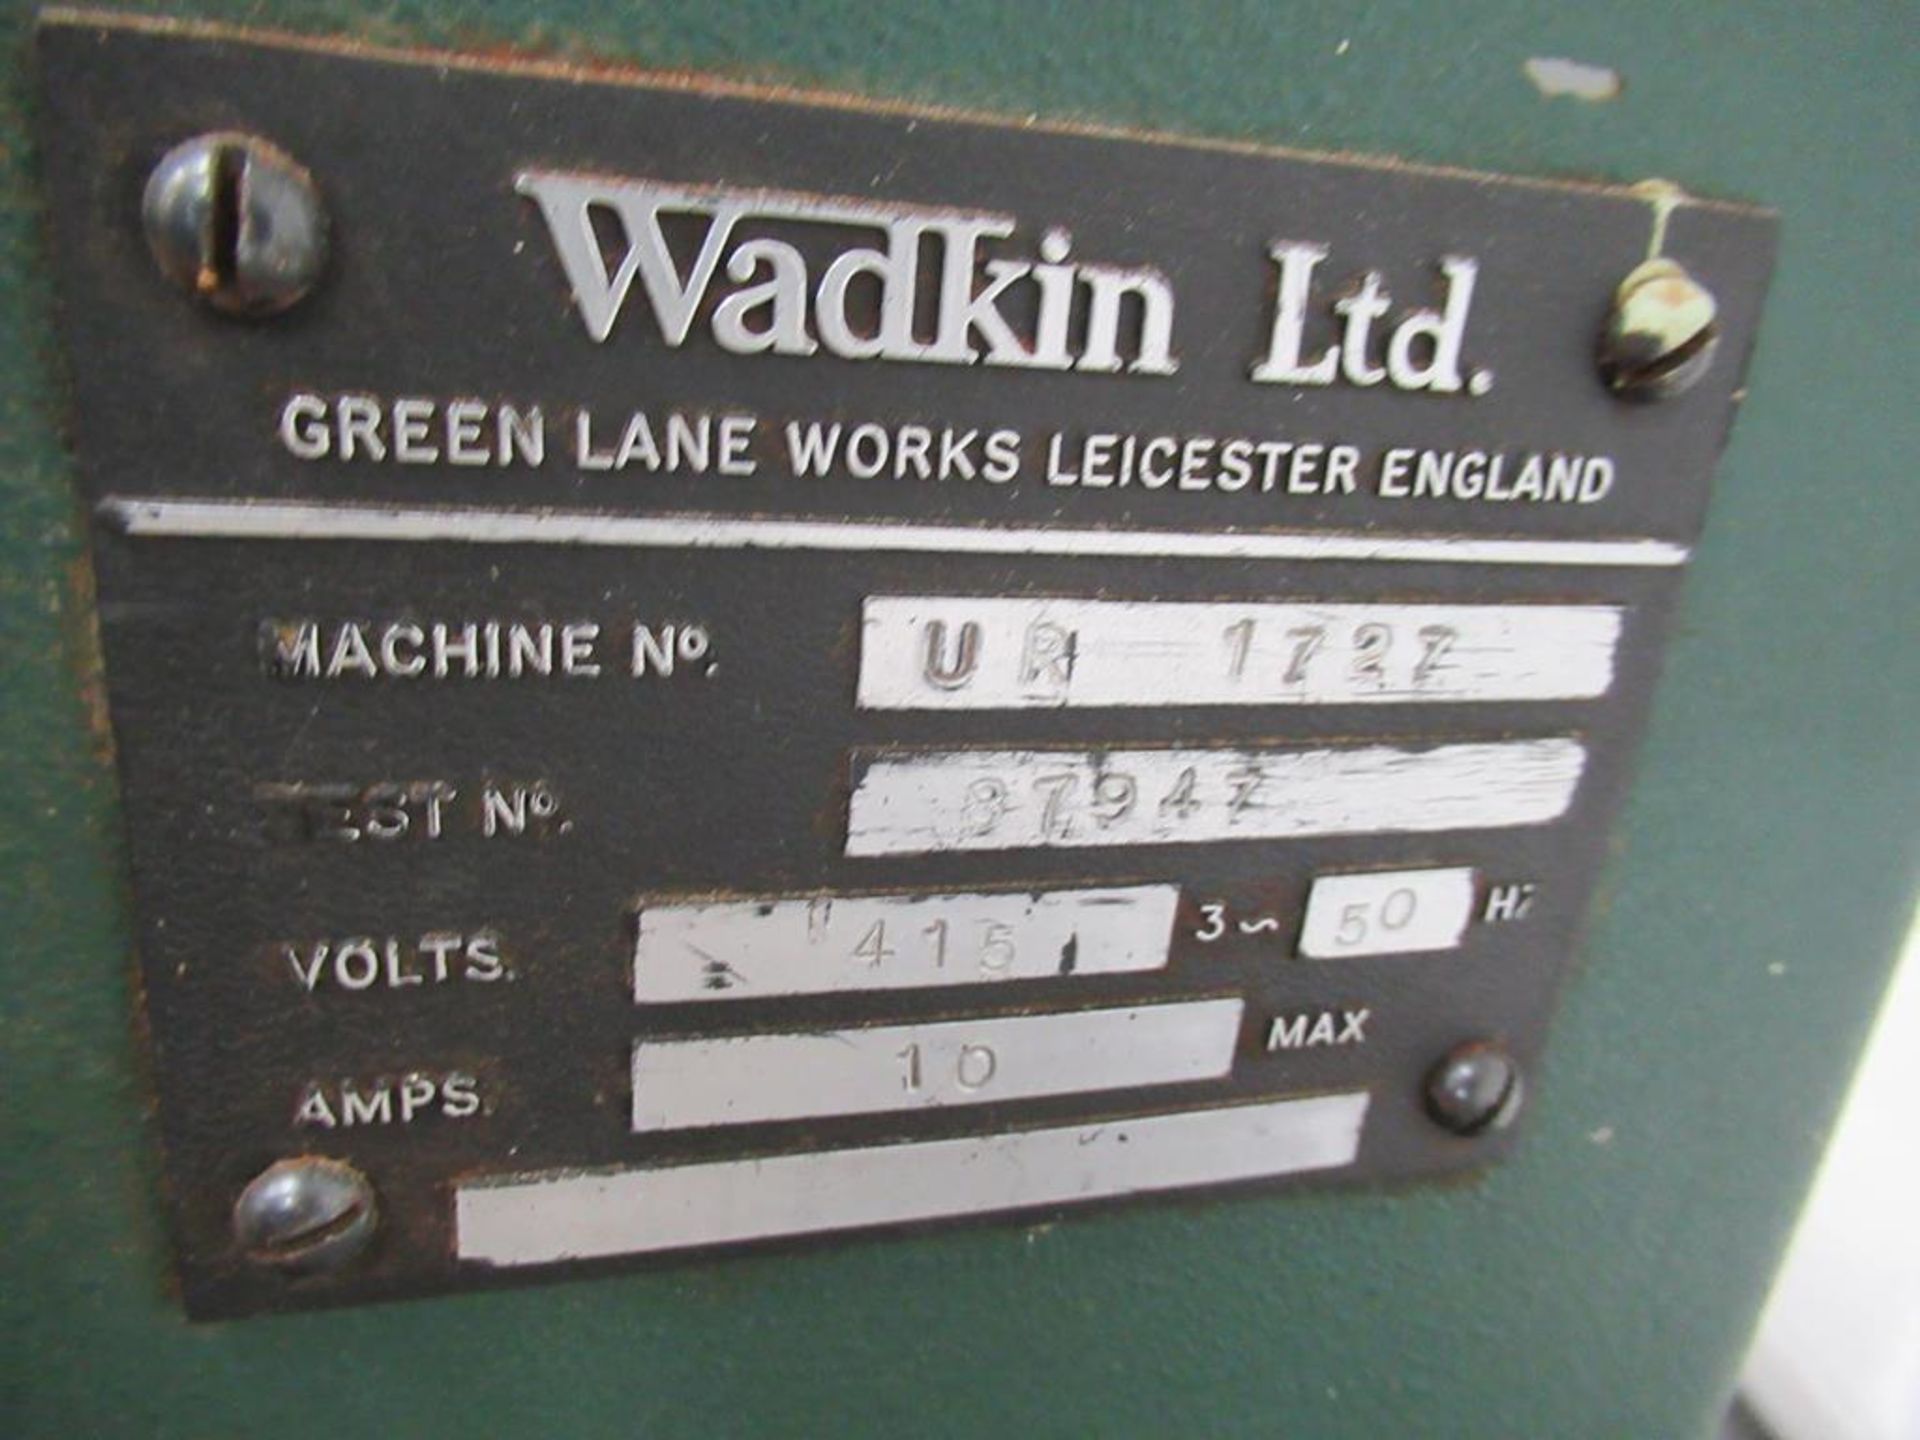 Wadkin UR1727 Treadle operated Router 3 phase - Image 5 of 5